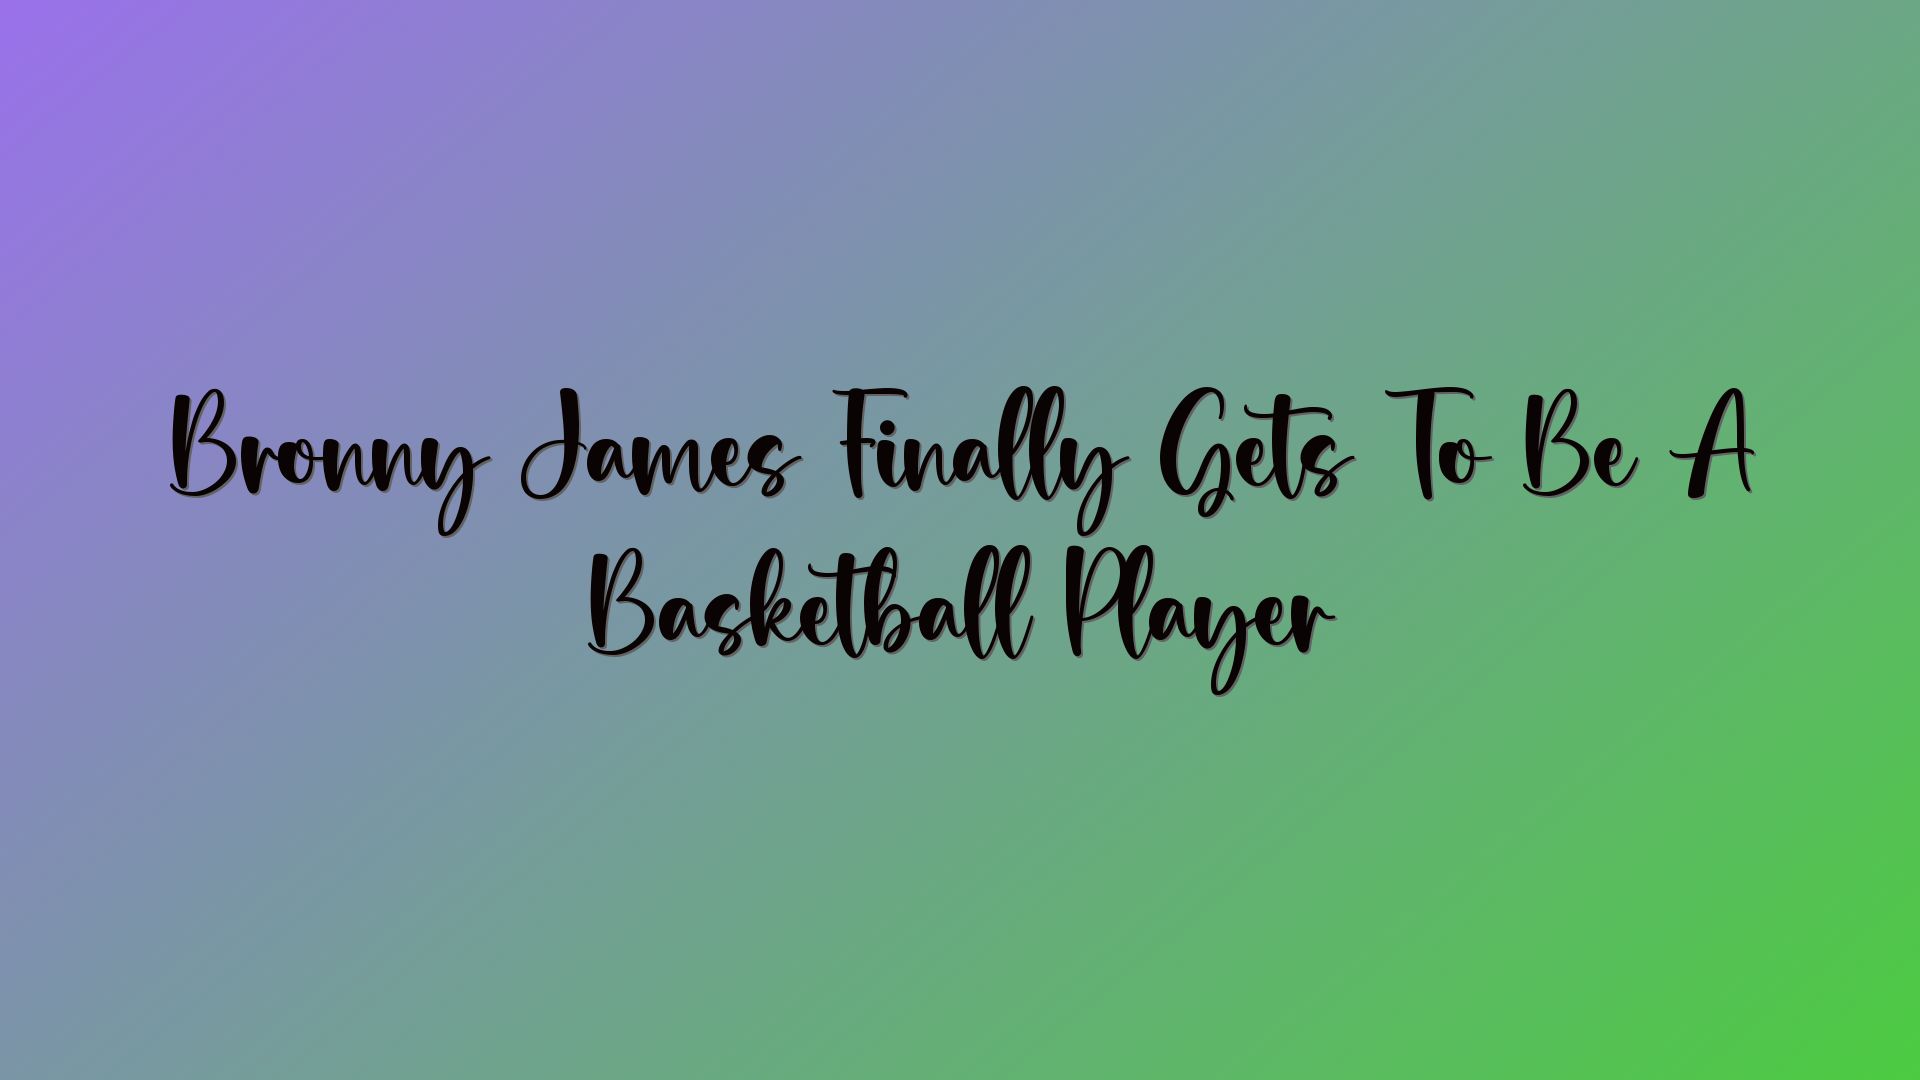 Bronny James Finally Gets To Be A Basketball Player